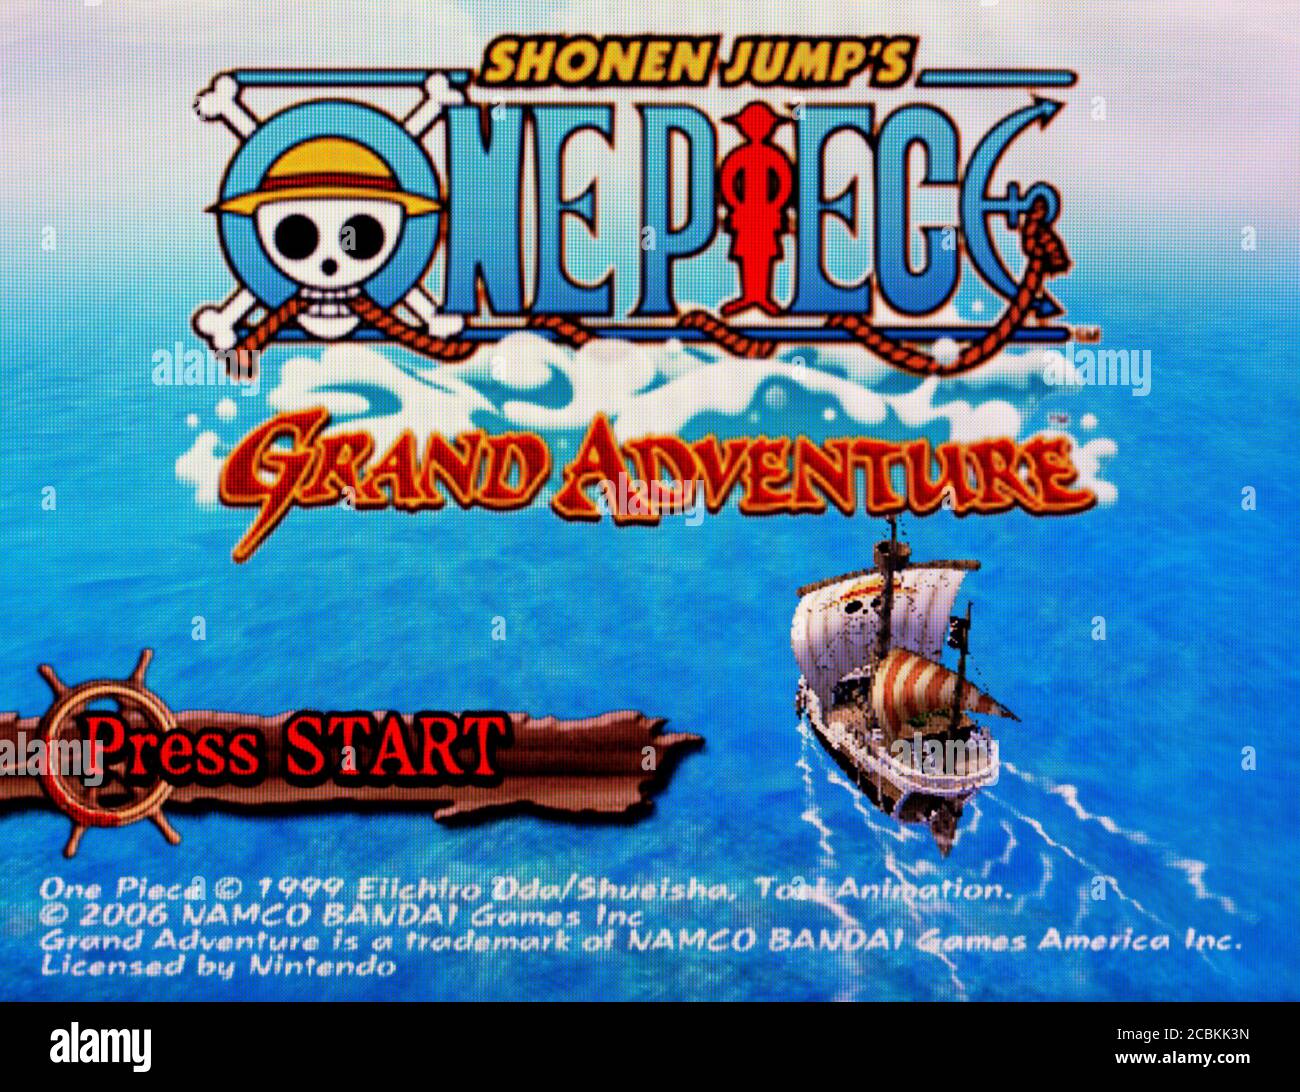 Shonen Jump's One Piece - Nintendo Game Boy Advance Videogame - Editorial  use only Stock Photo - Alamy